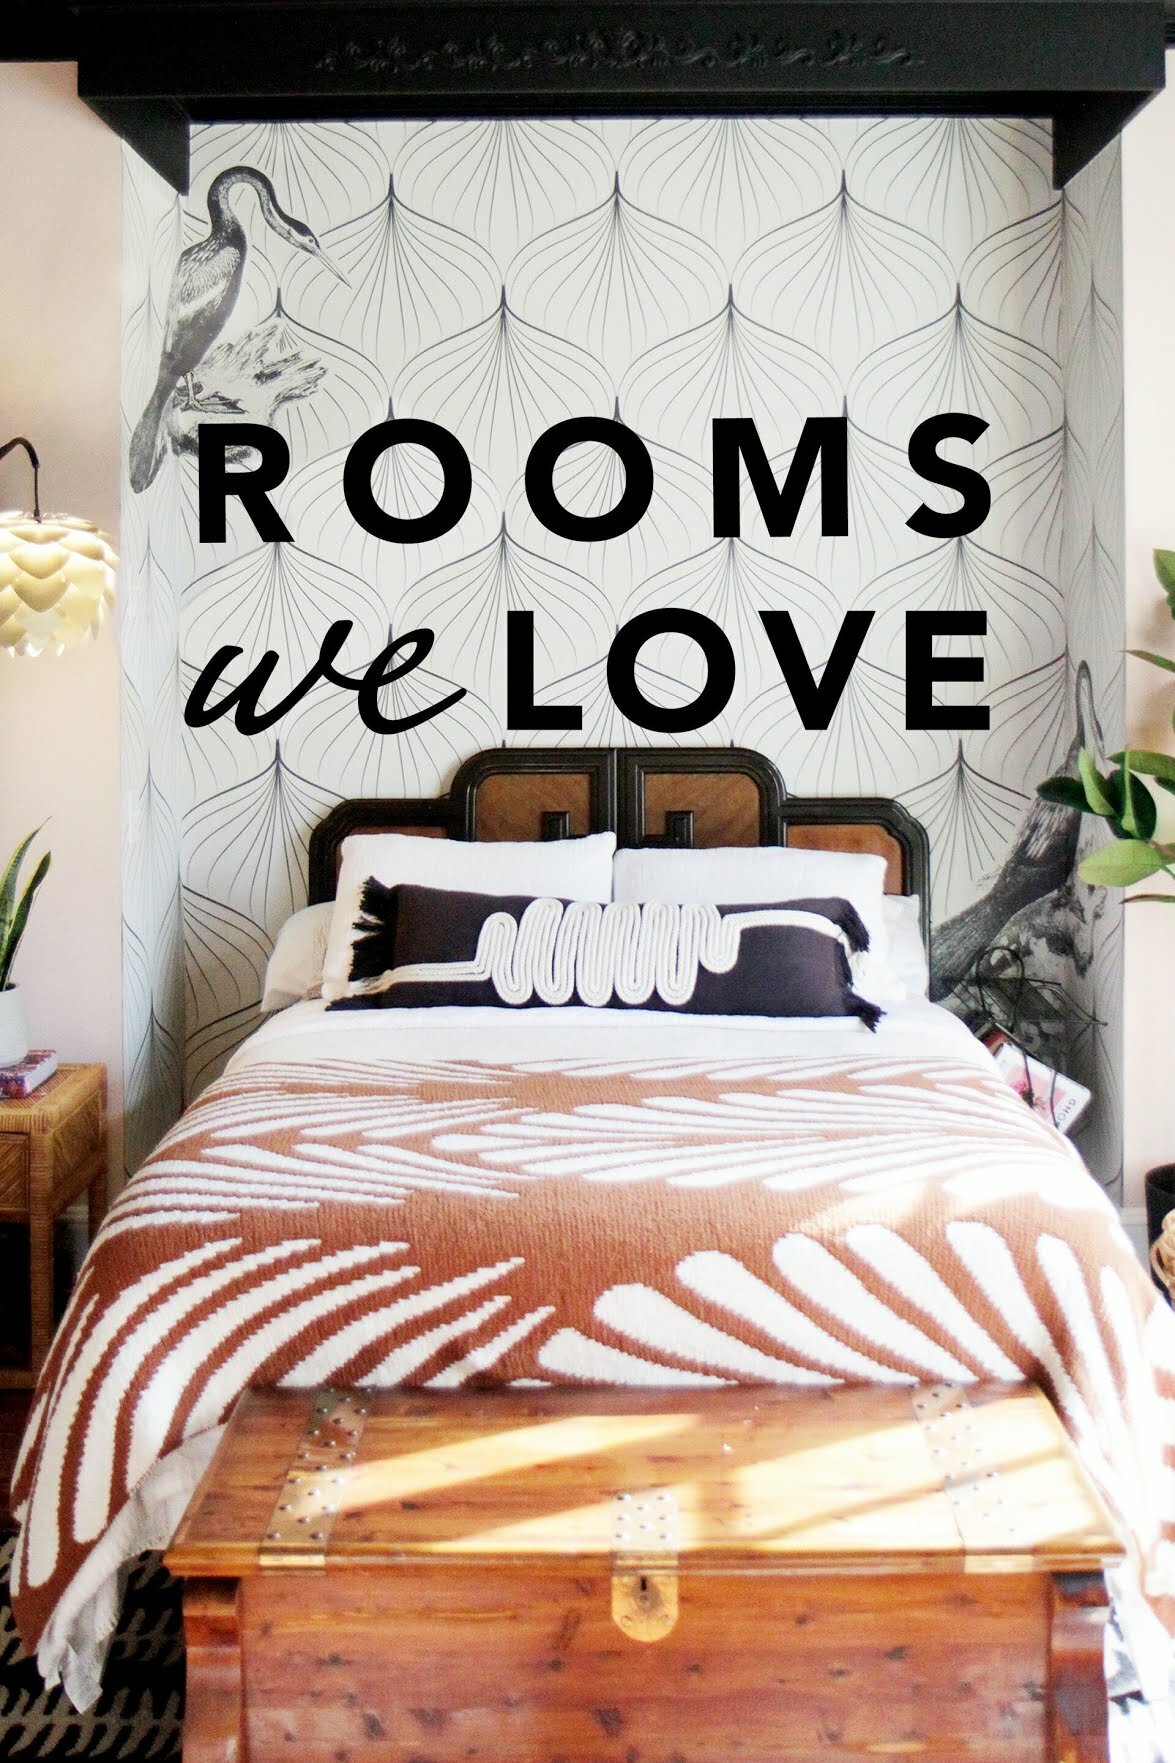 Rooms We Love ne zaman